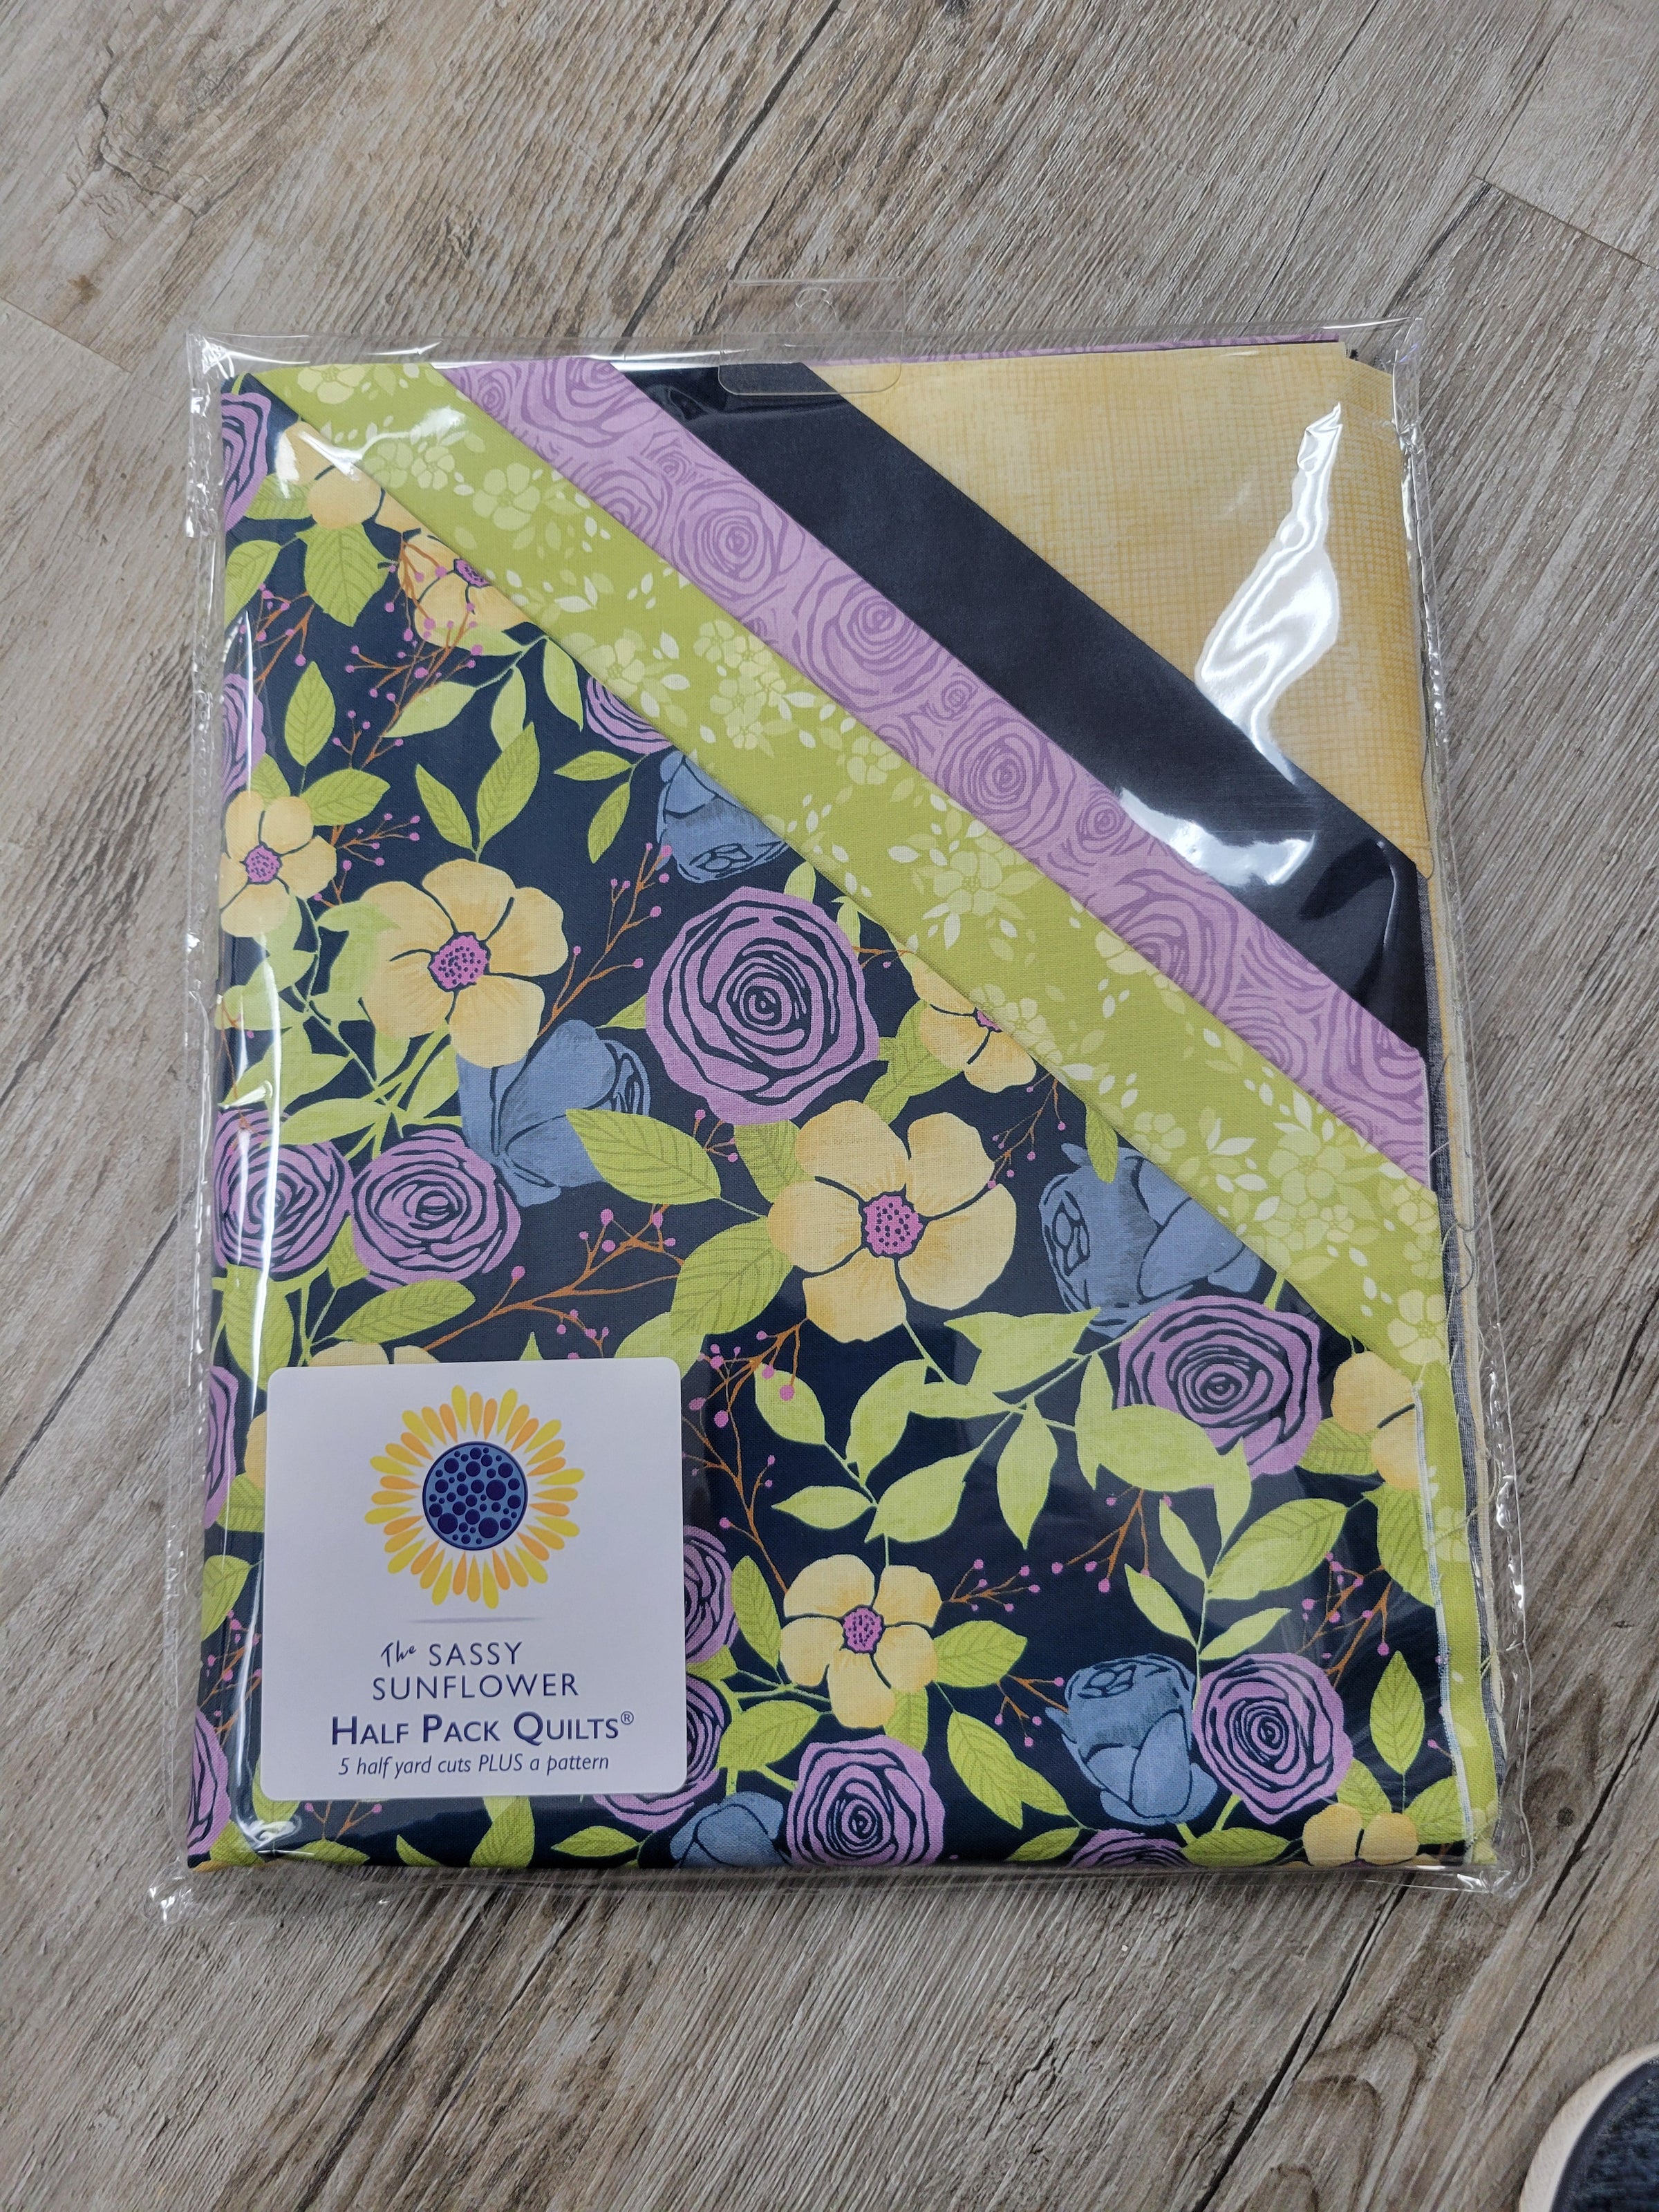 Moonlight Garden - The Sassy Sunflower Half Pack Quilts™ Kit